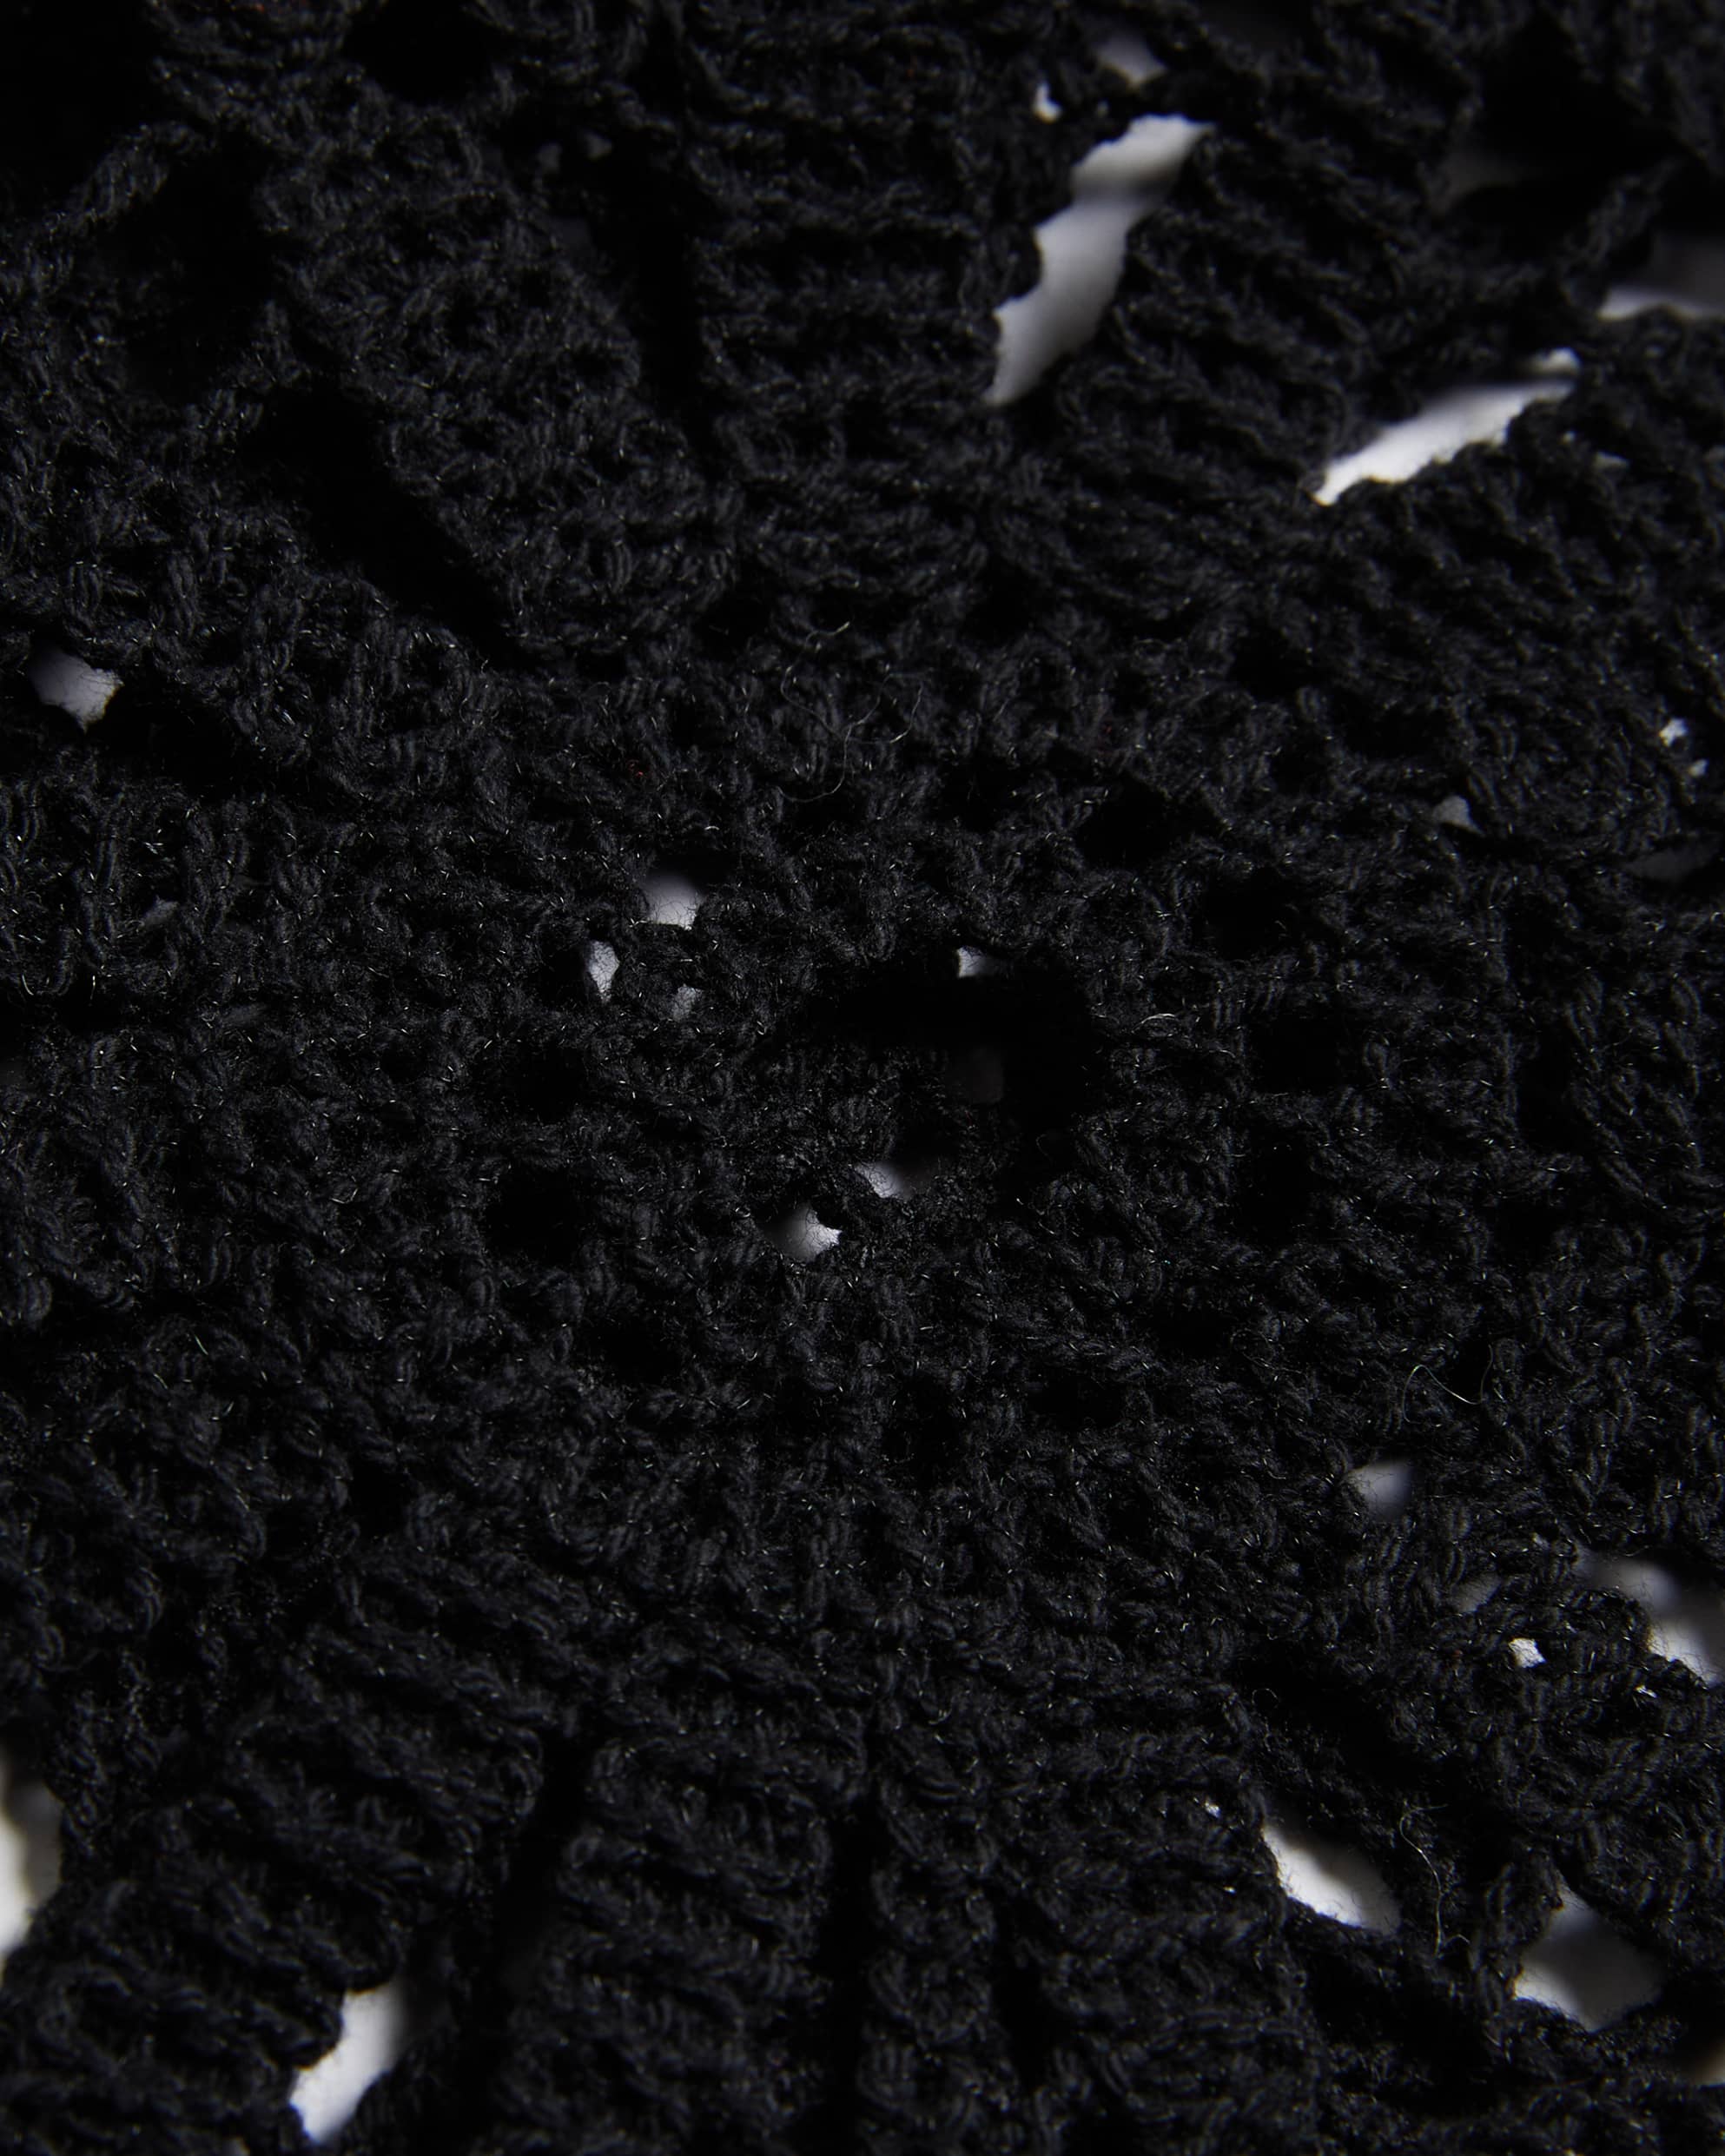 Corha Floral Crochet Sleeveless Midi Dress Black